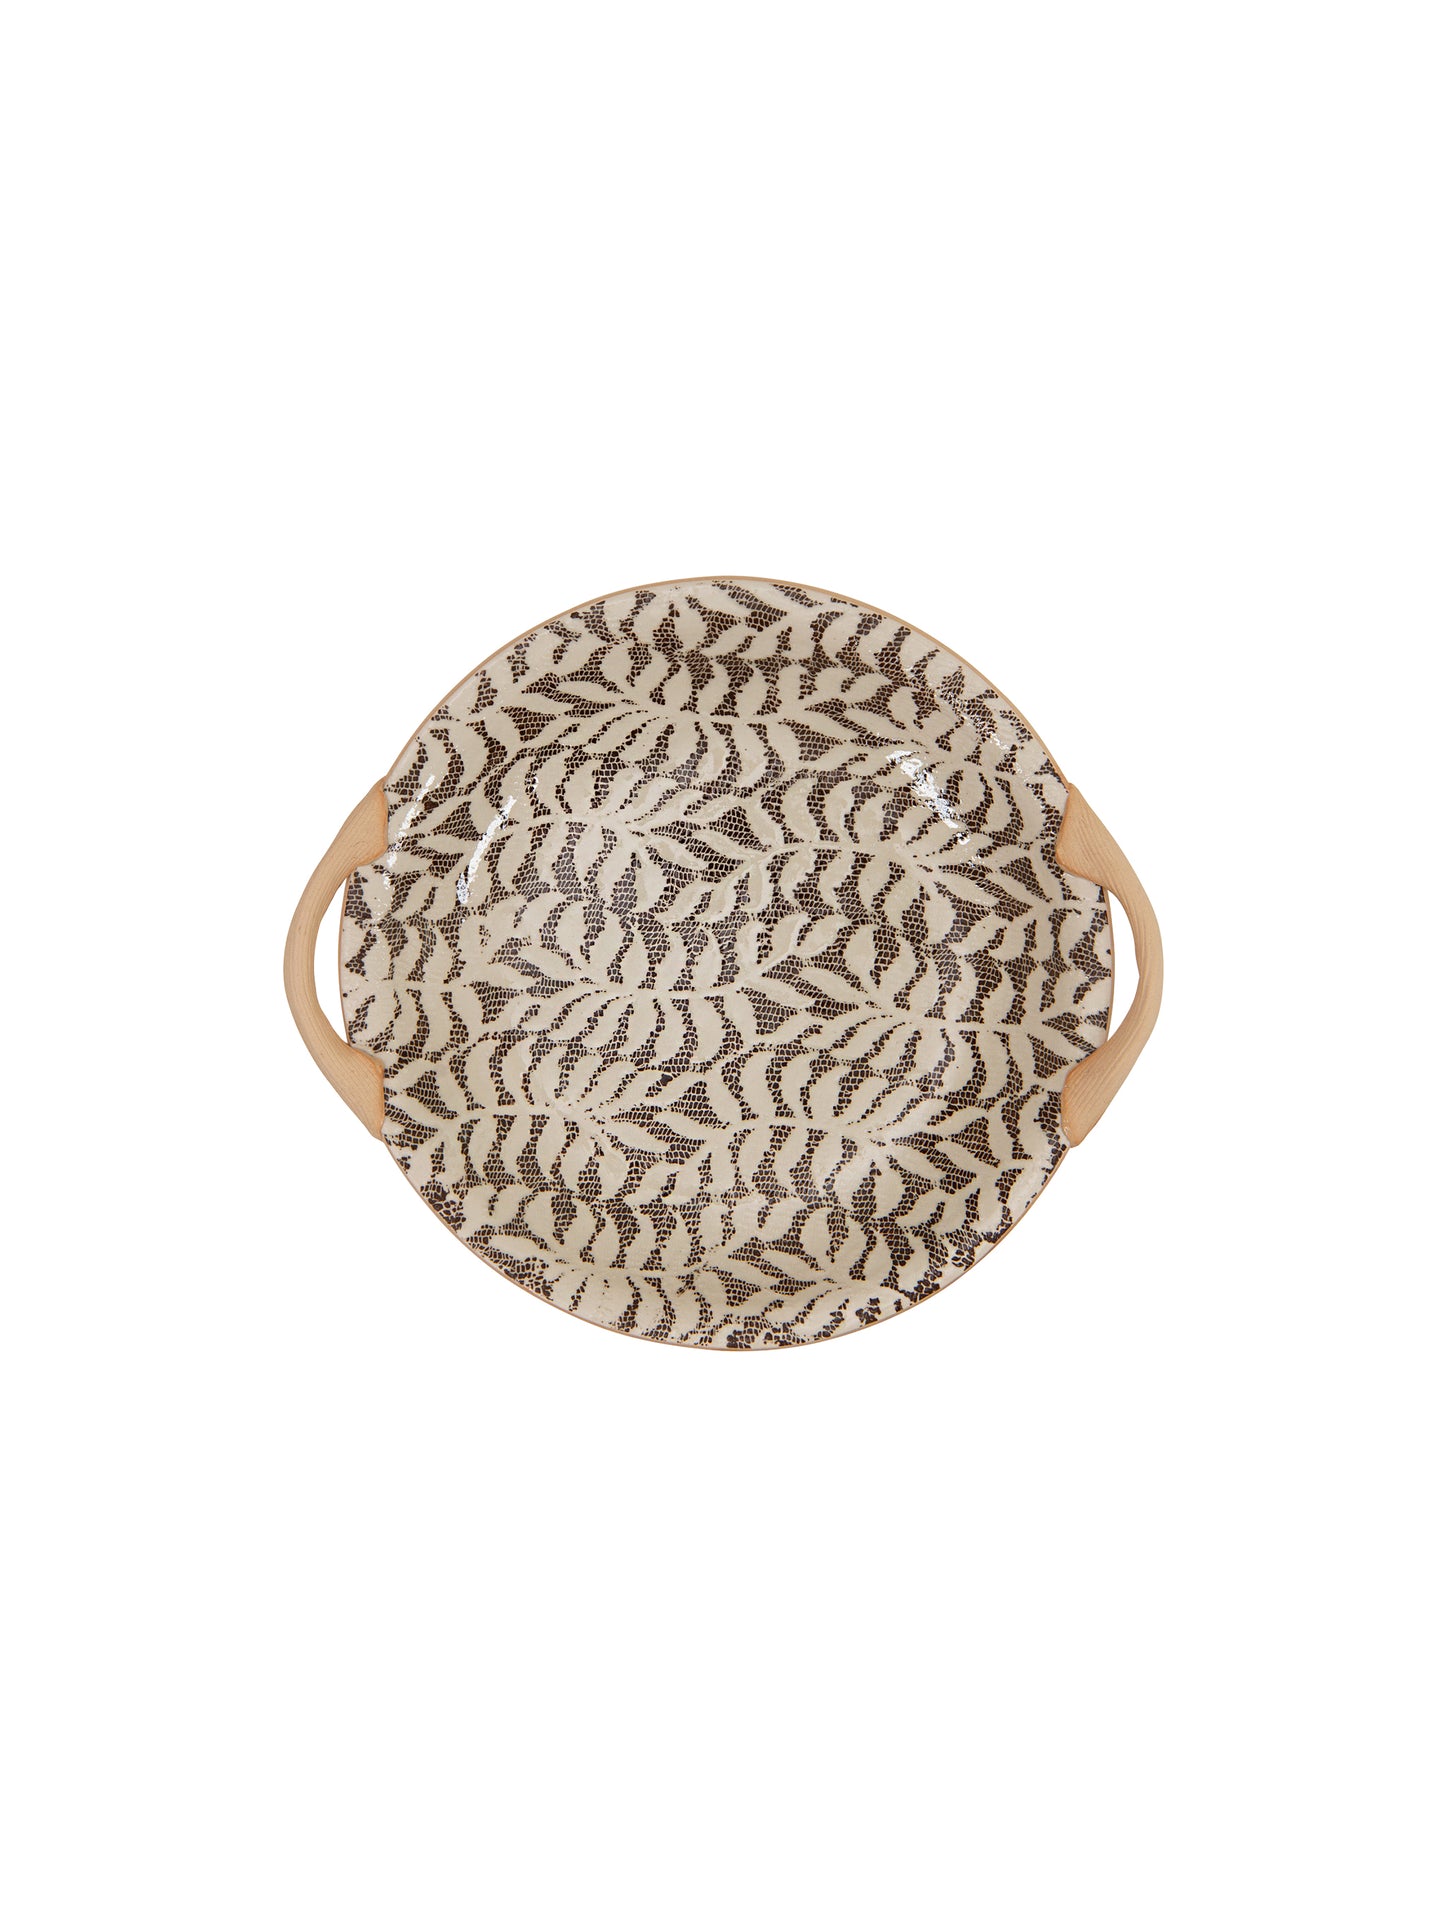 Terrafirma Ceramics Chestnut Fern Round Platter with Handles Weston Table